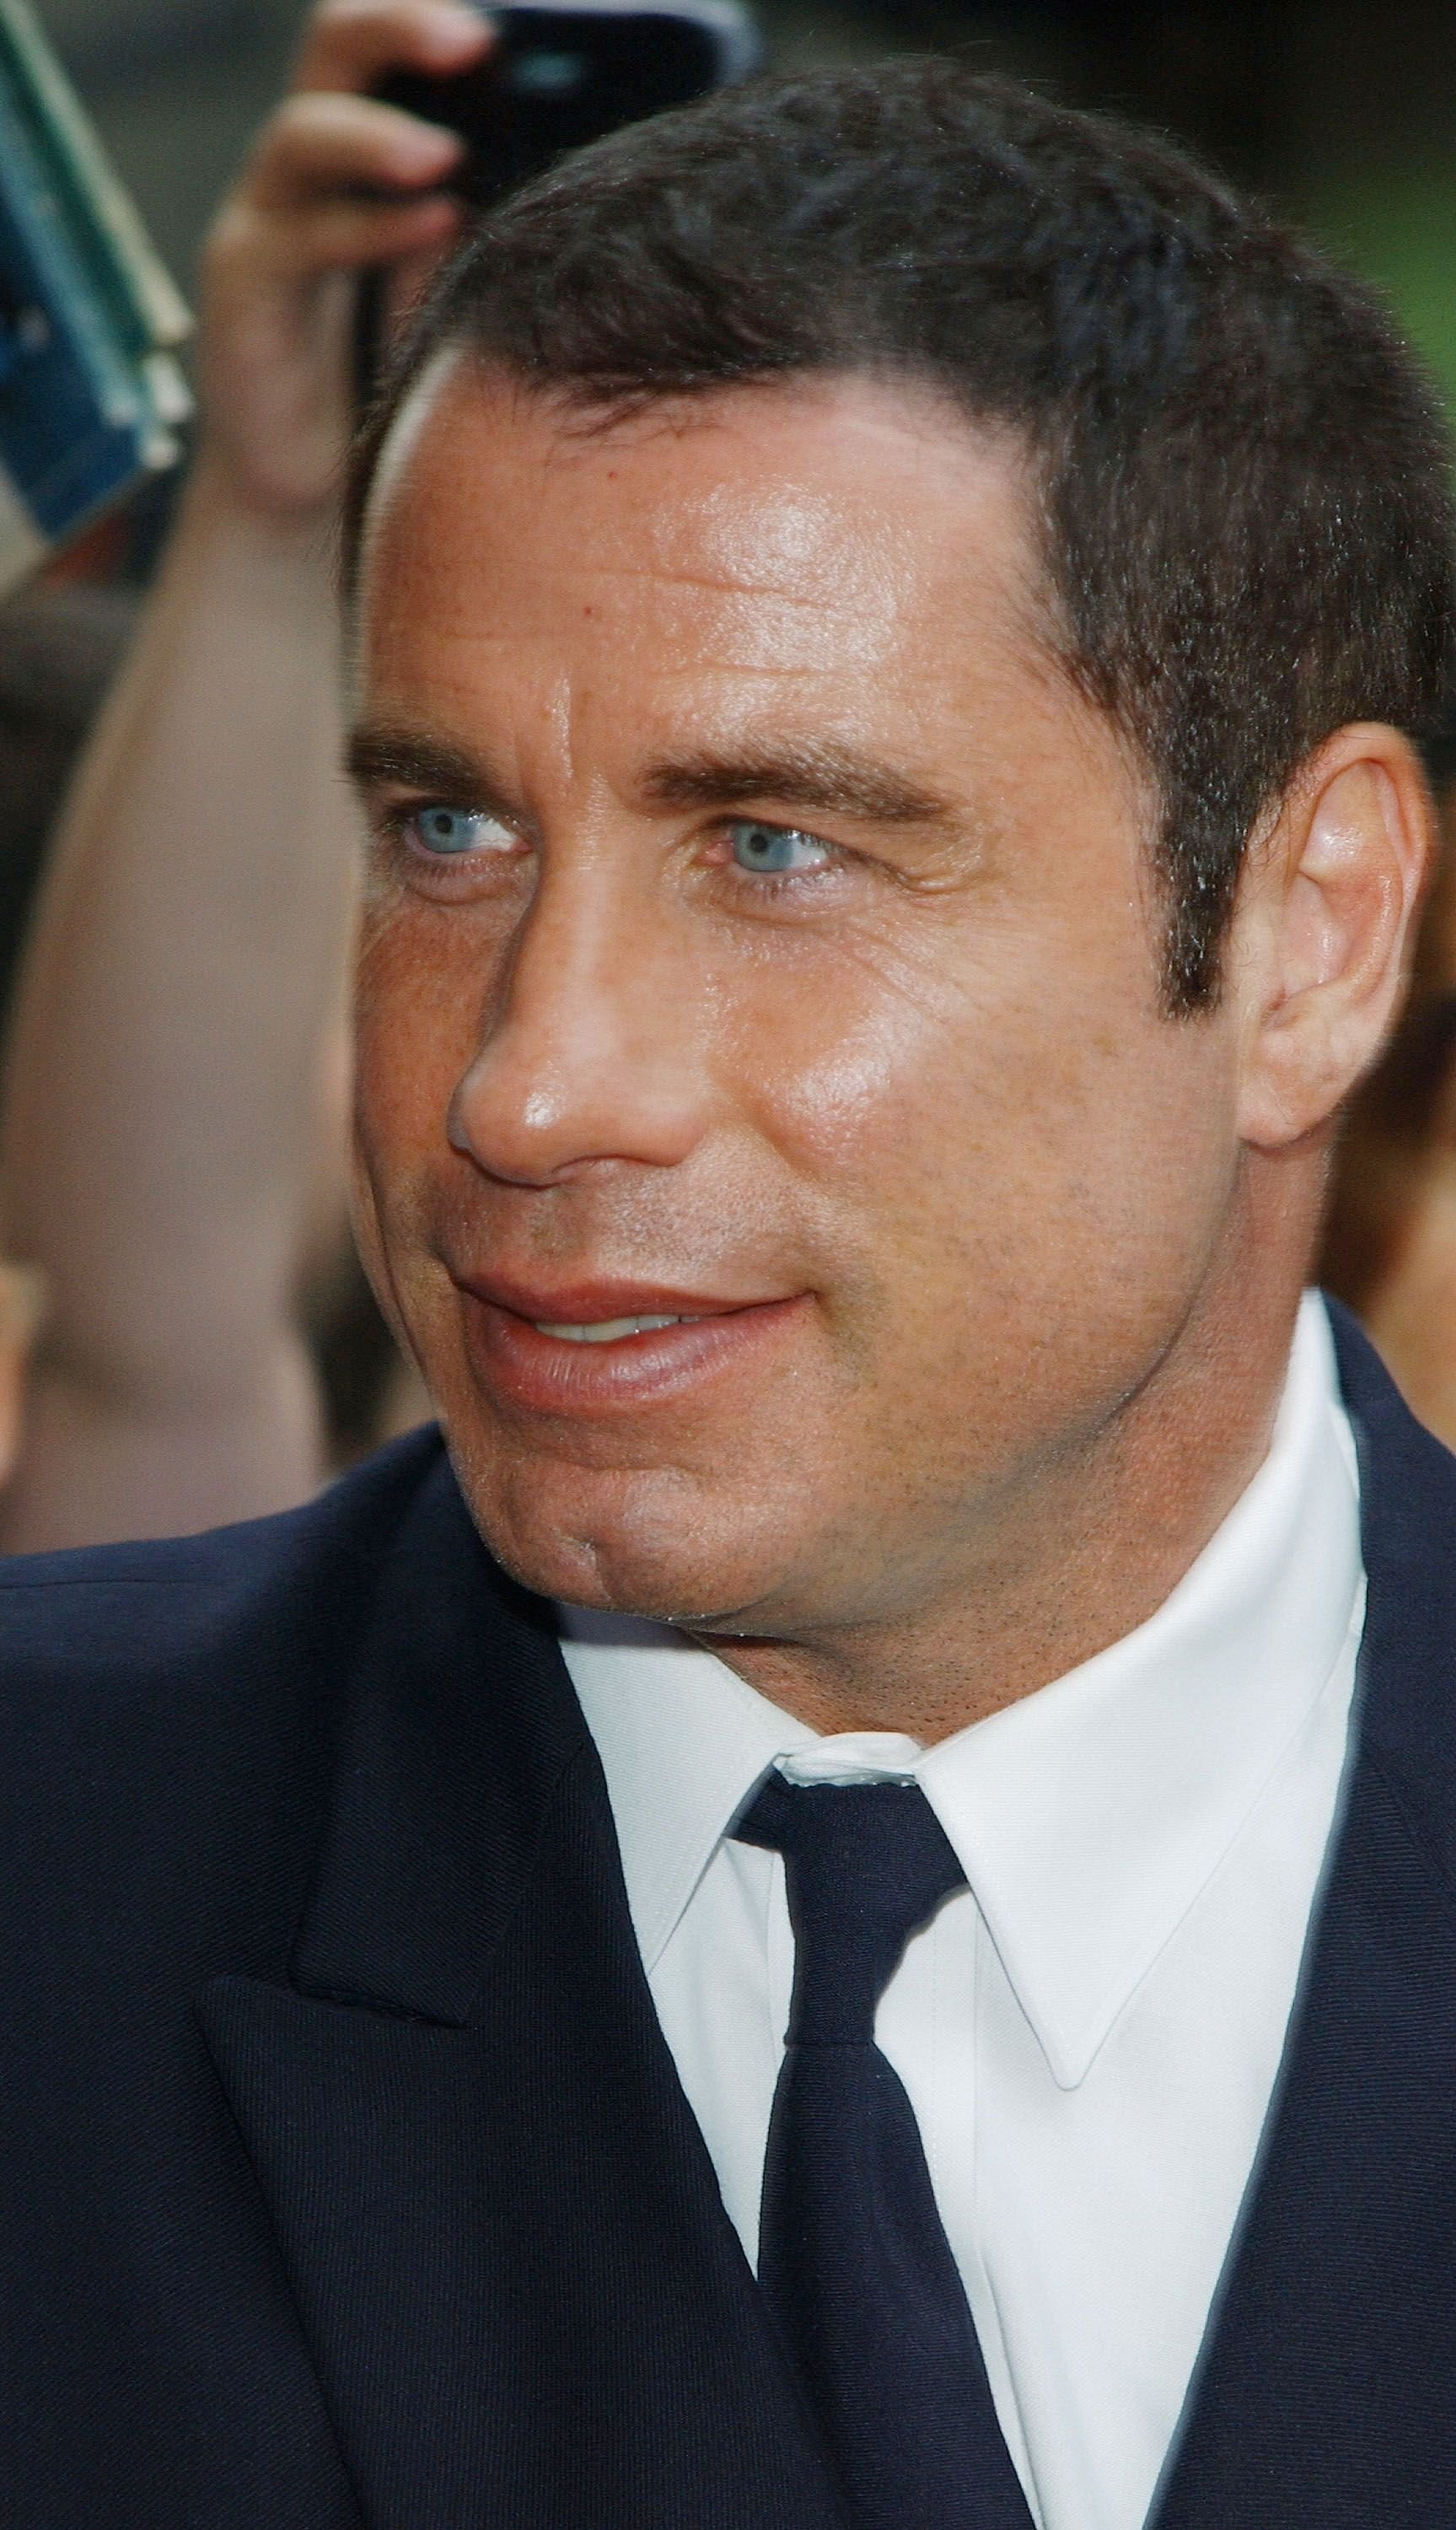 John Travolta arrives at the Ed Sullivan Theater. | Source: Wikimedia Commons